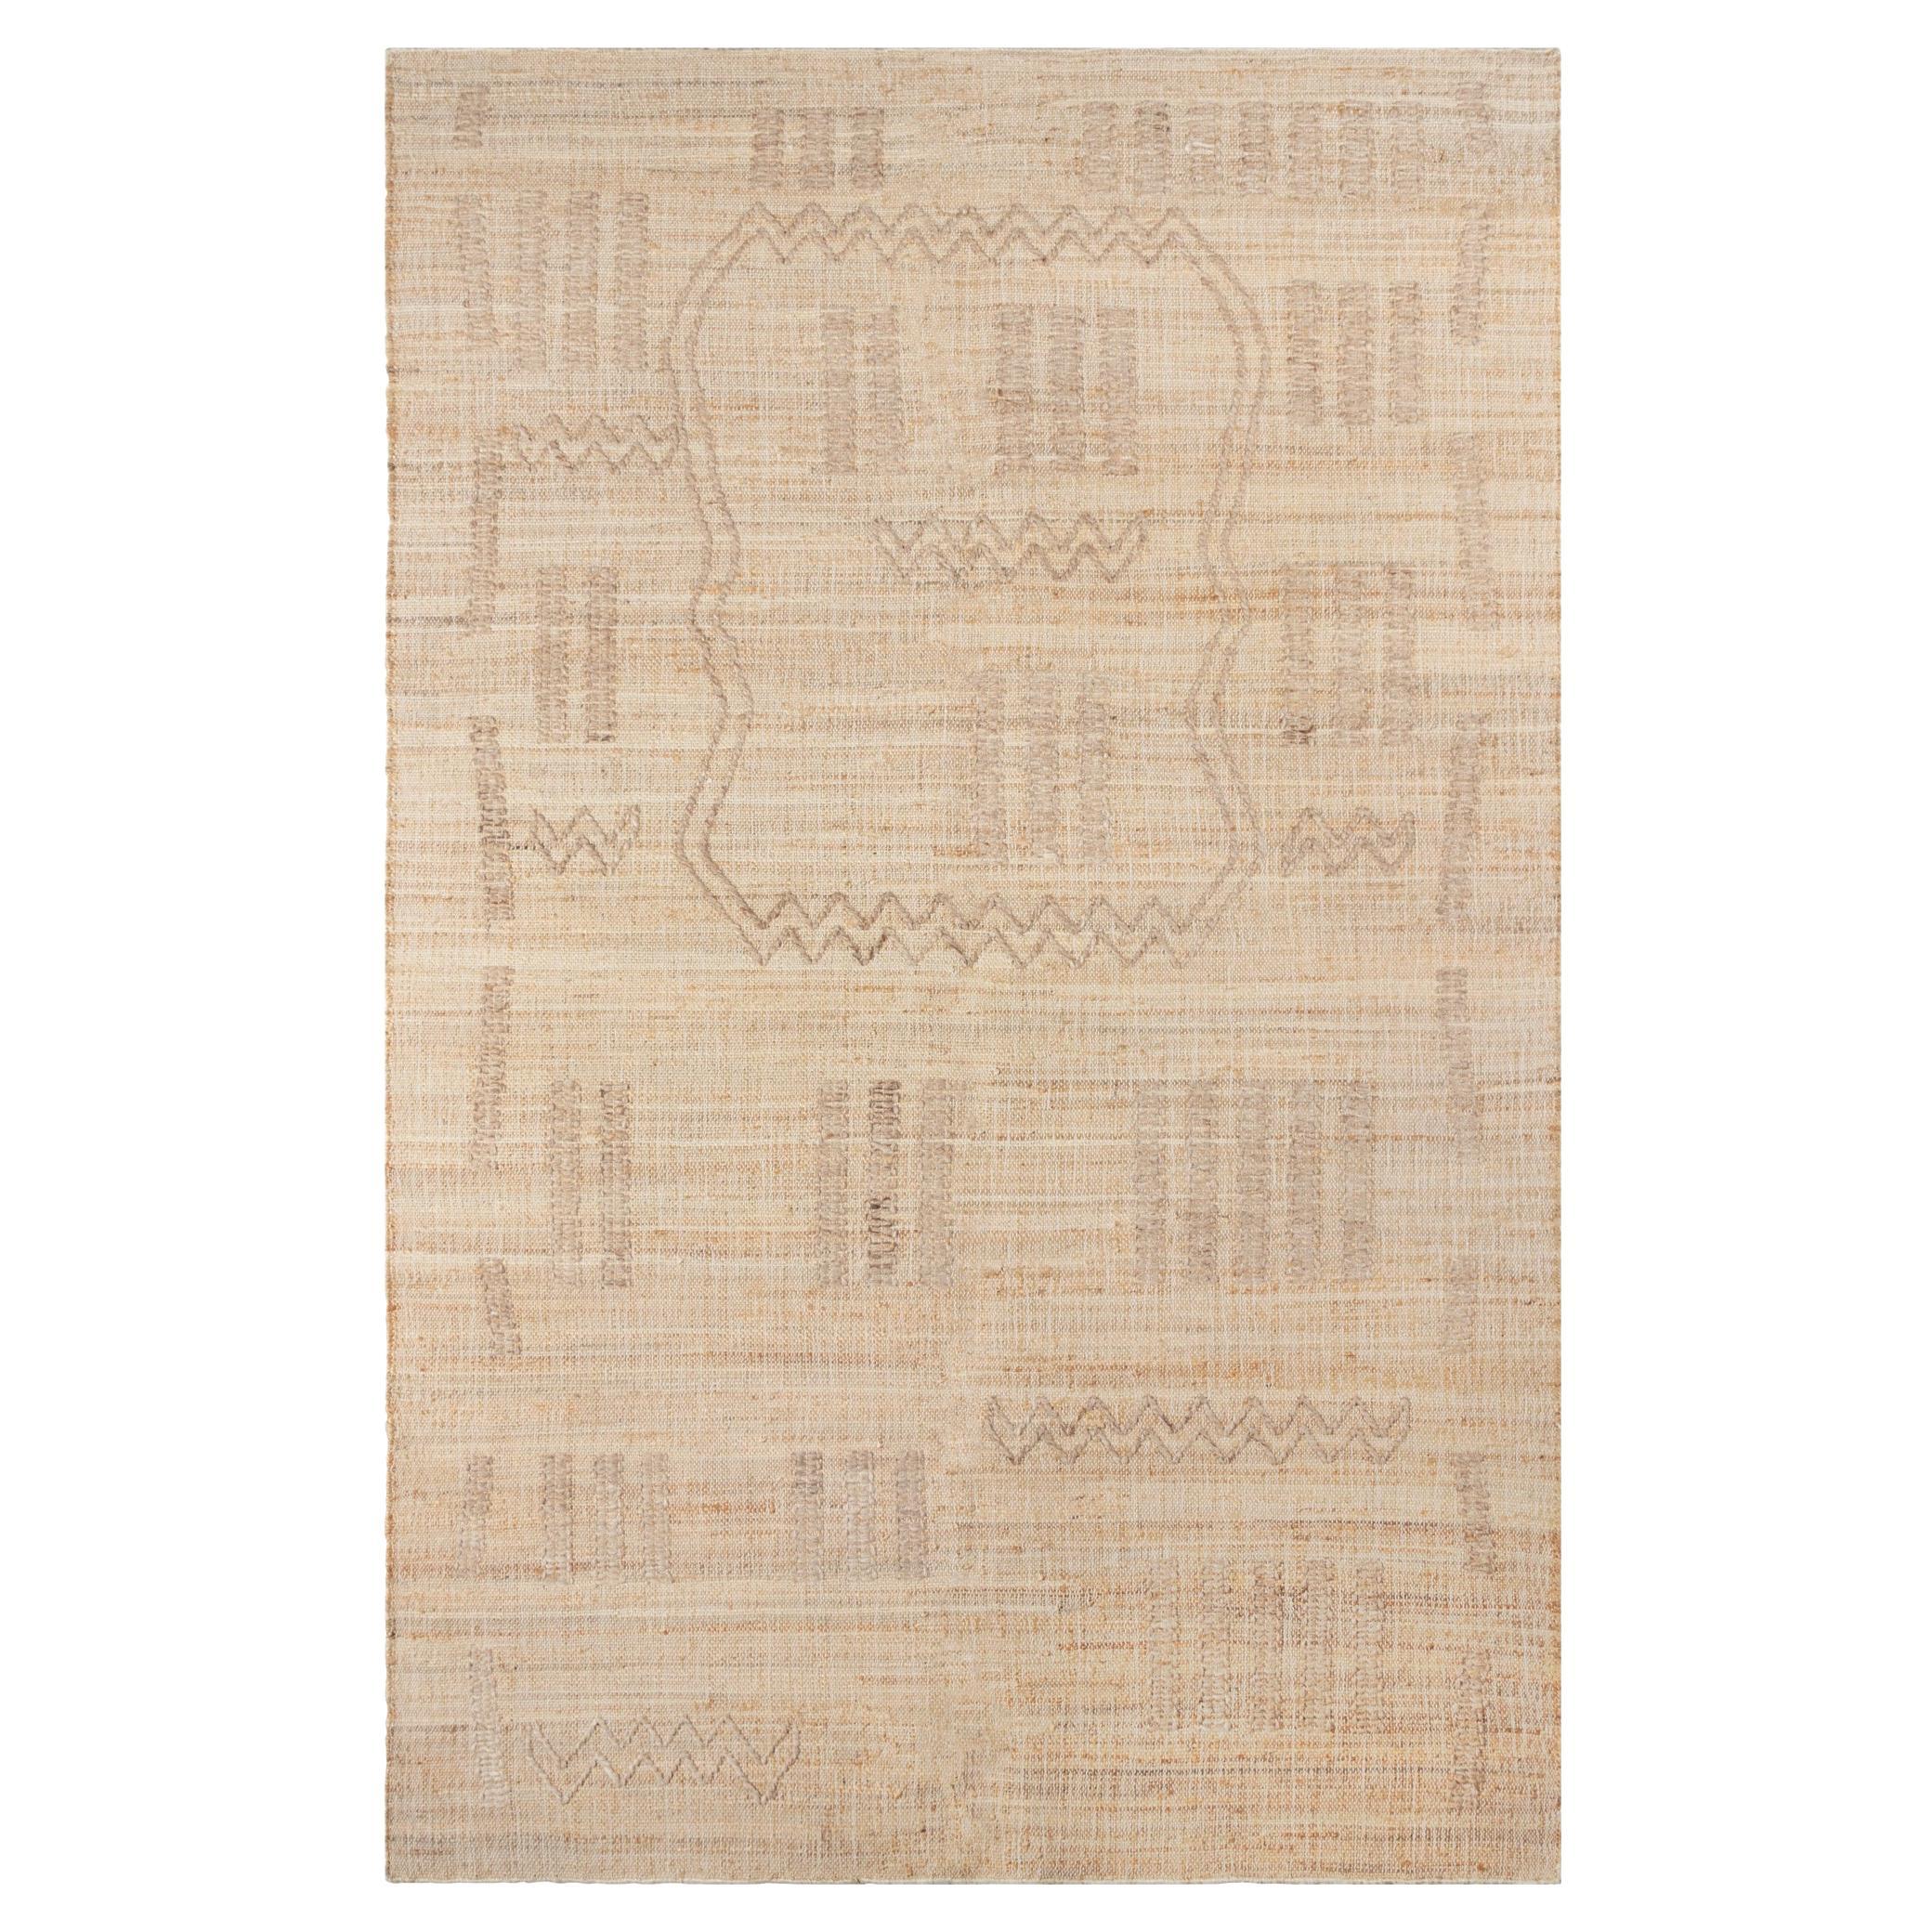 “Argan Sabule” African Mud cloth-Inspired Rug by Christiane Lemieux